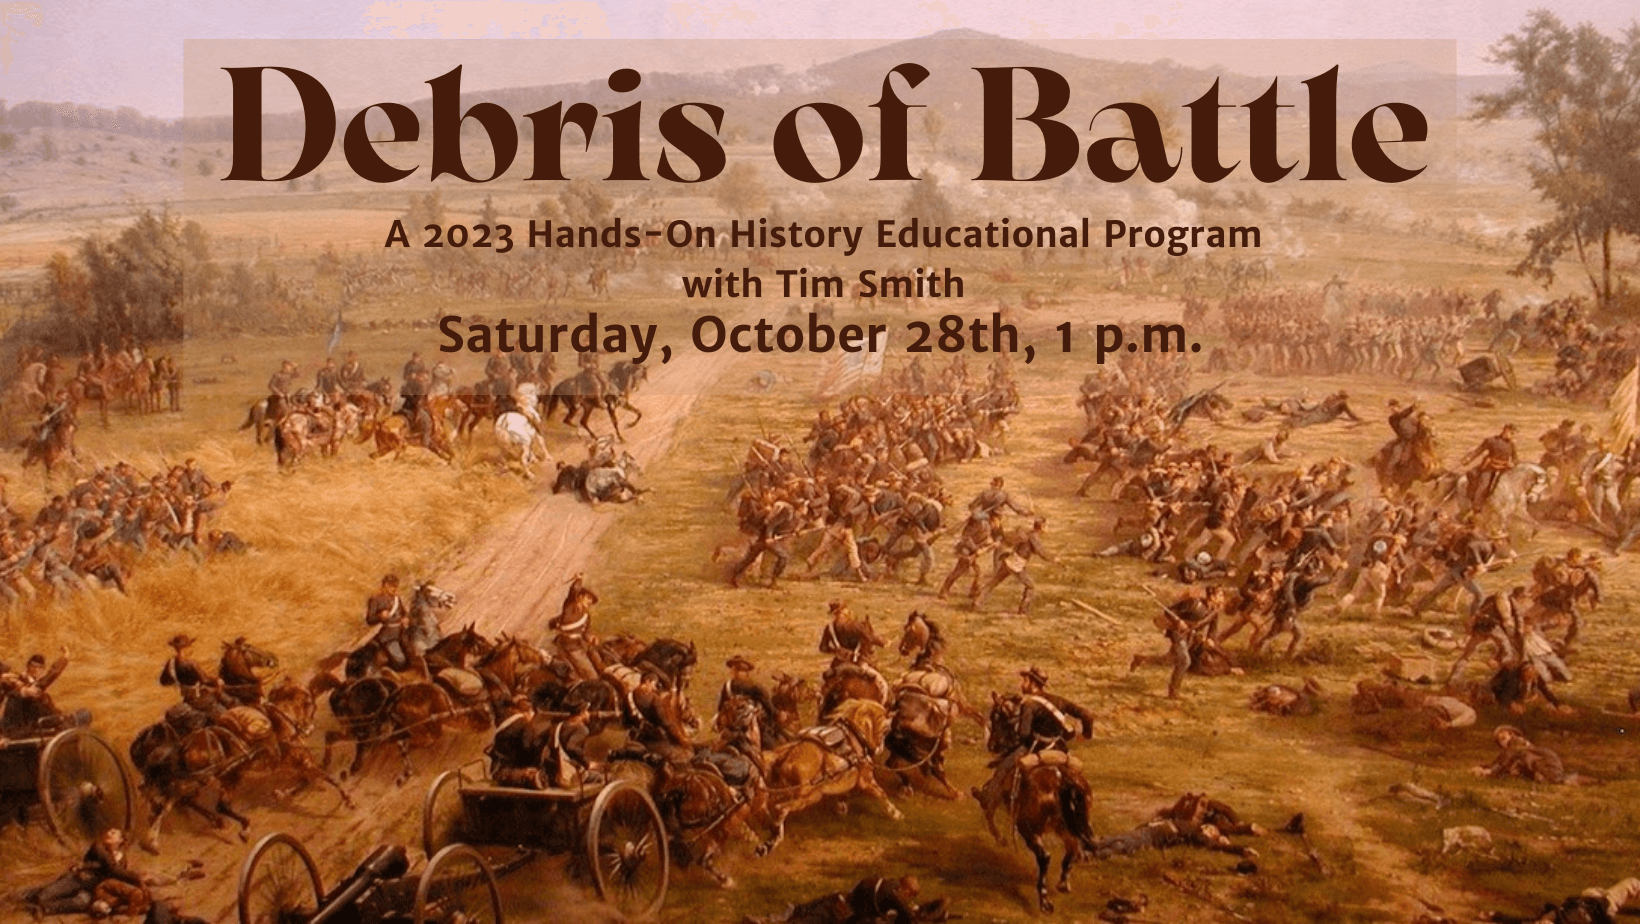 Debris of Battle: A 2023 Hands-On History Educational Program